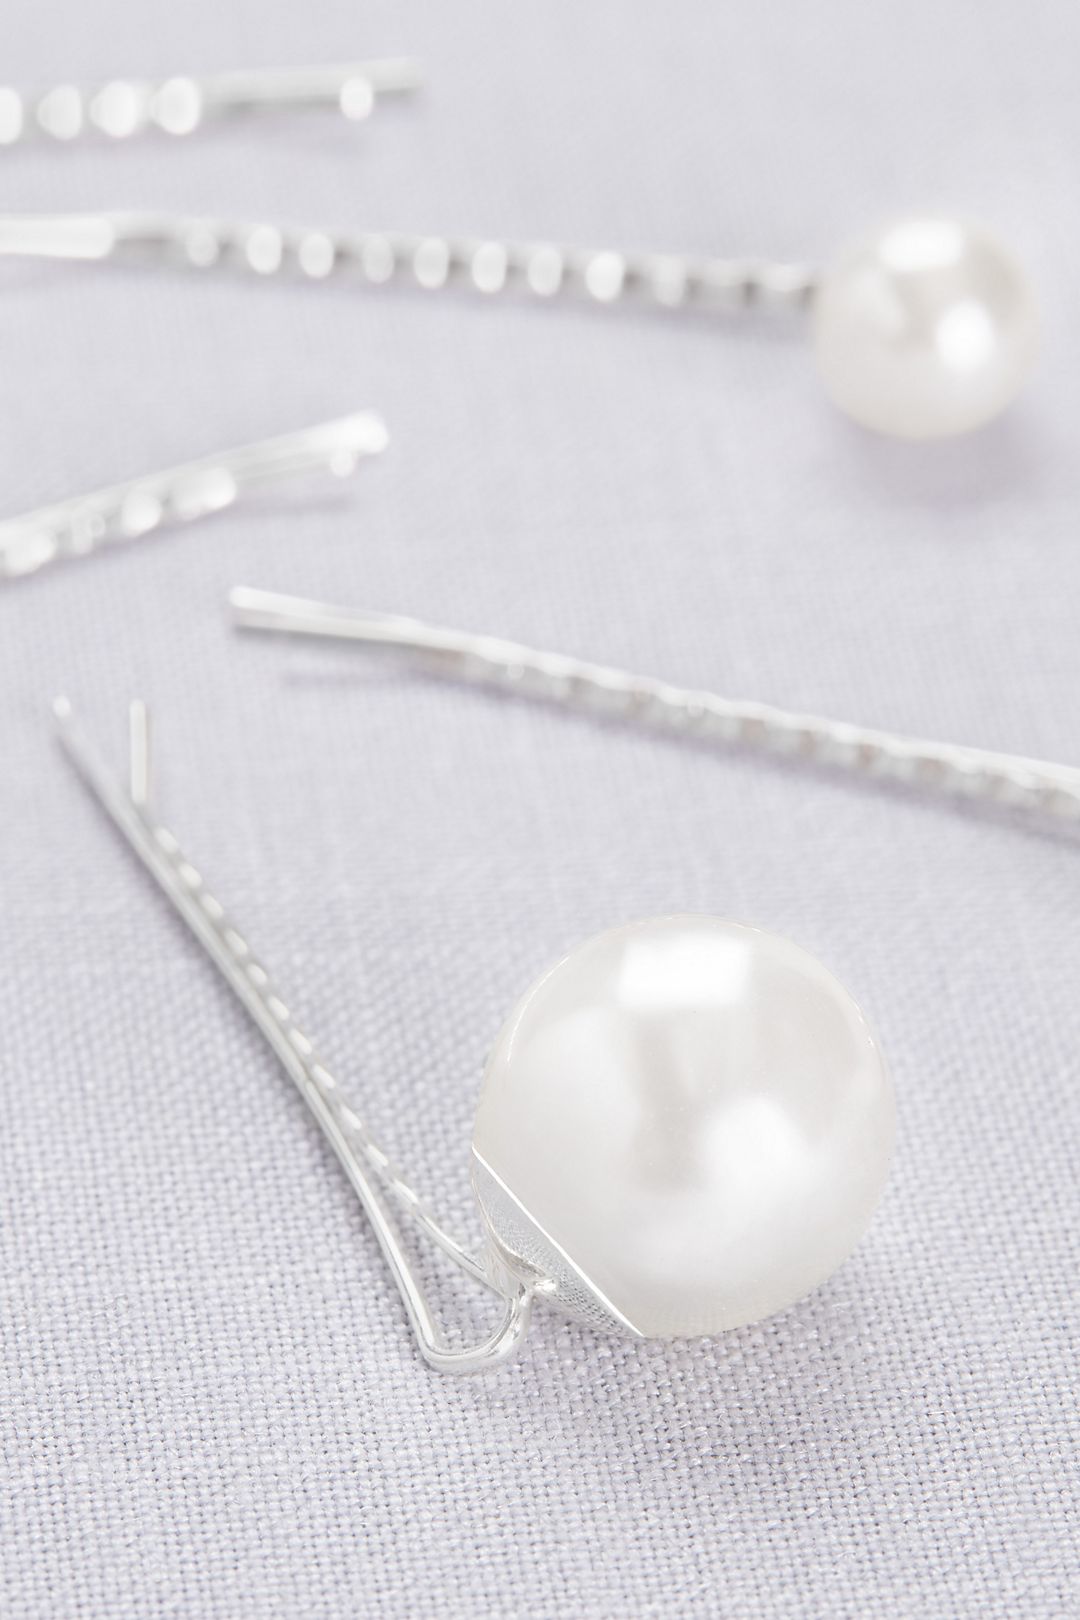 Large and Small Pearl Hair Pin Set Image 3